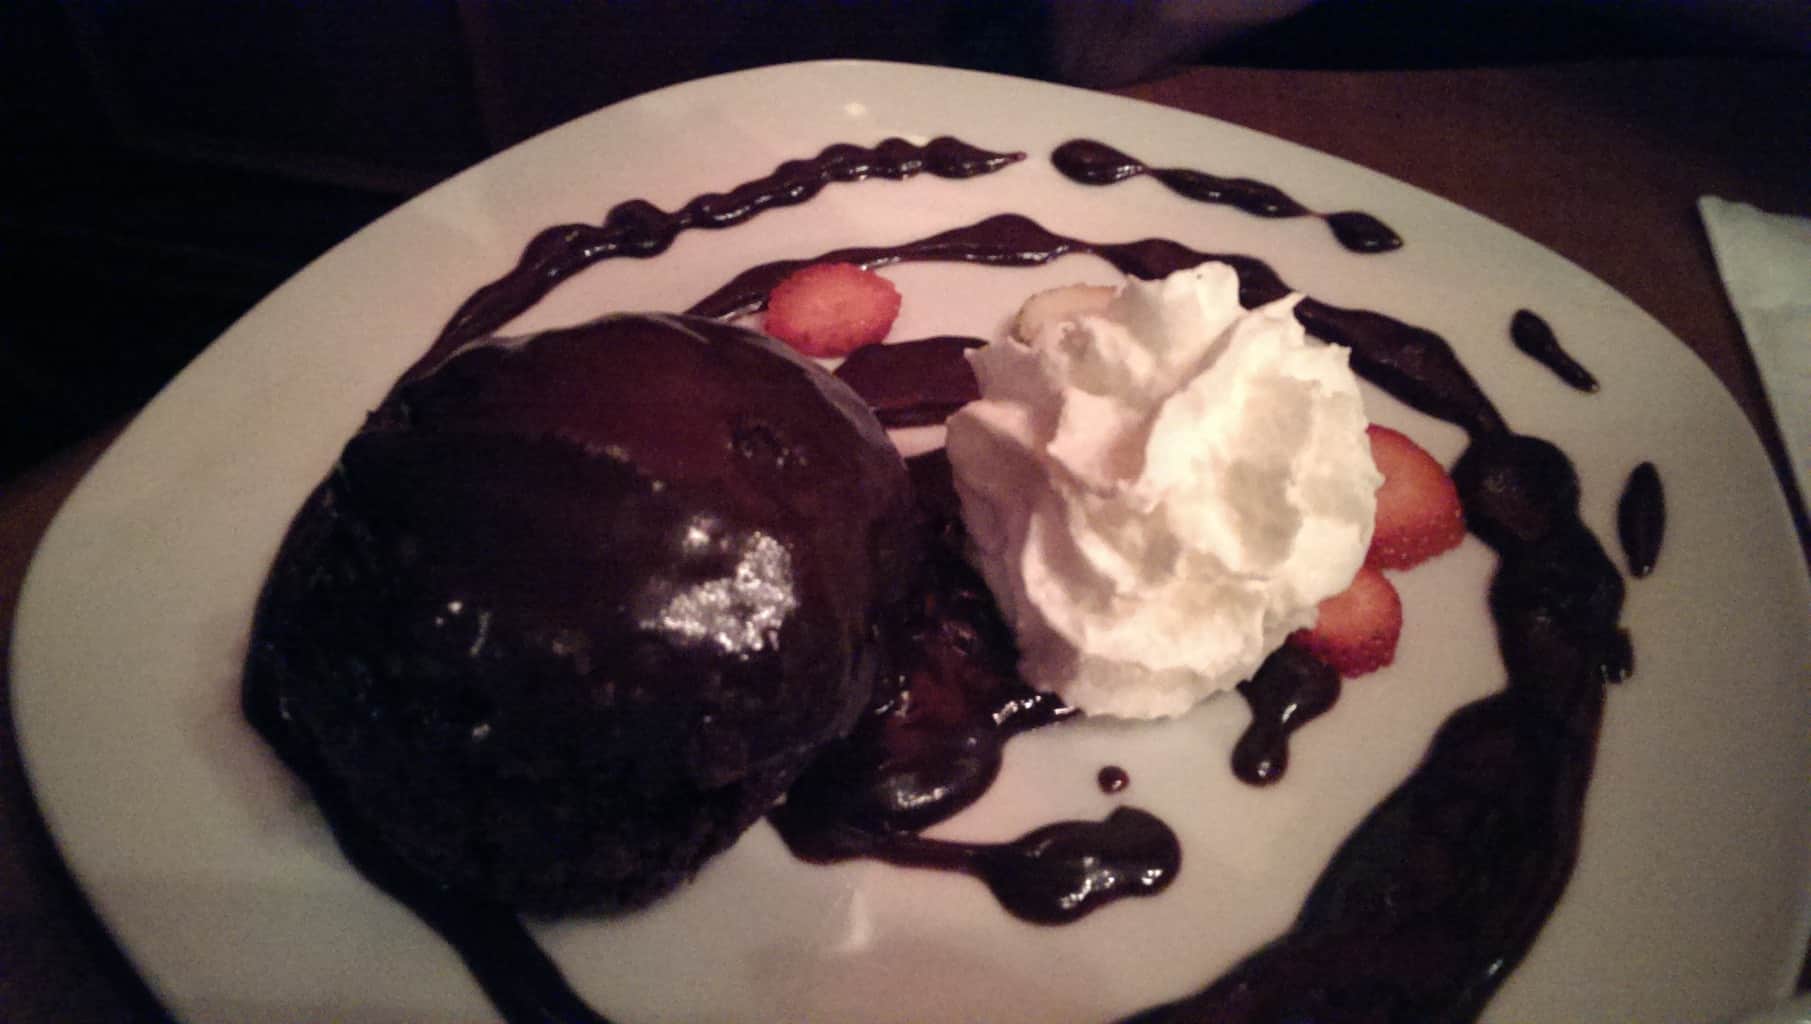 Chocolate Pudding Cake with Ice Cream